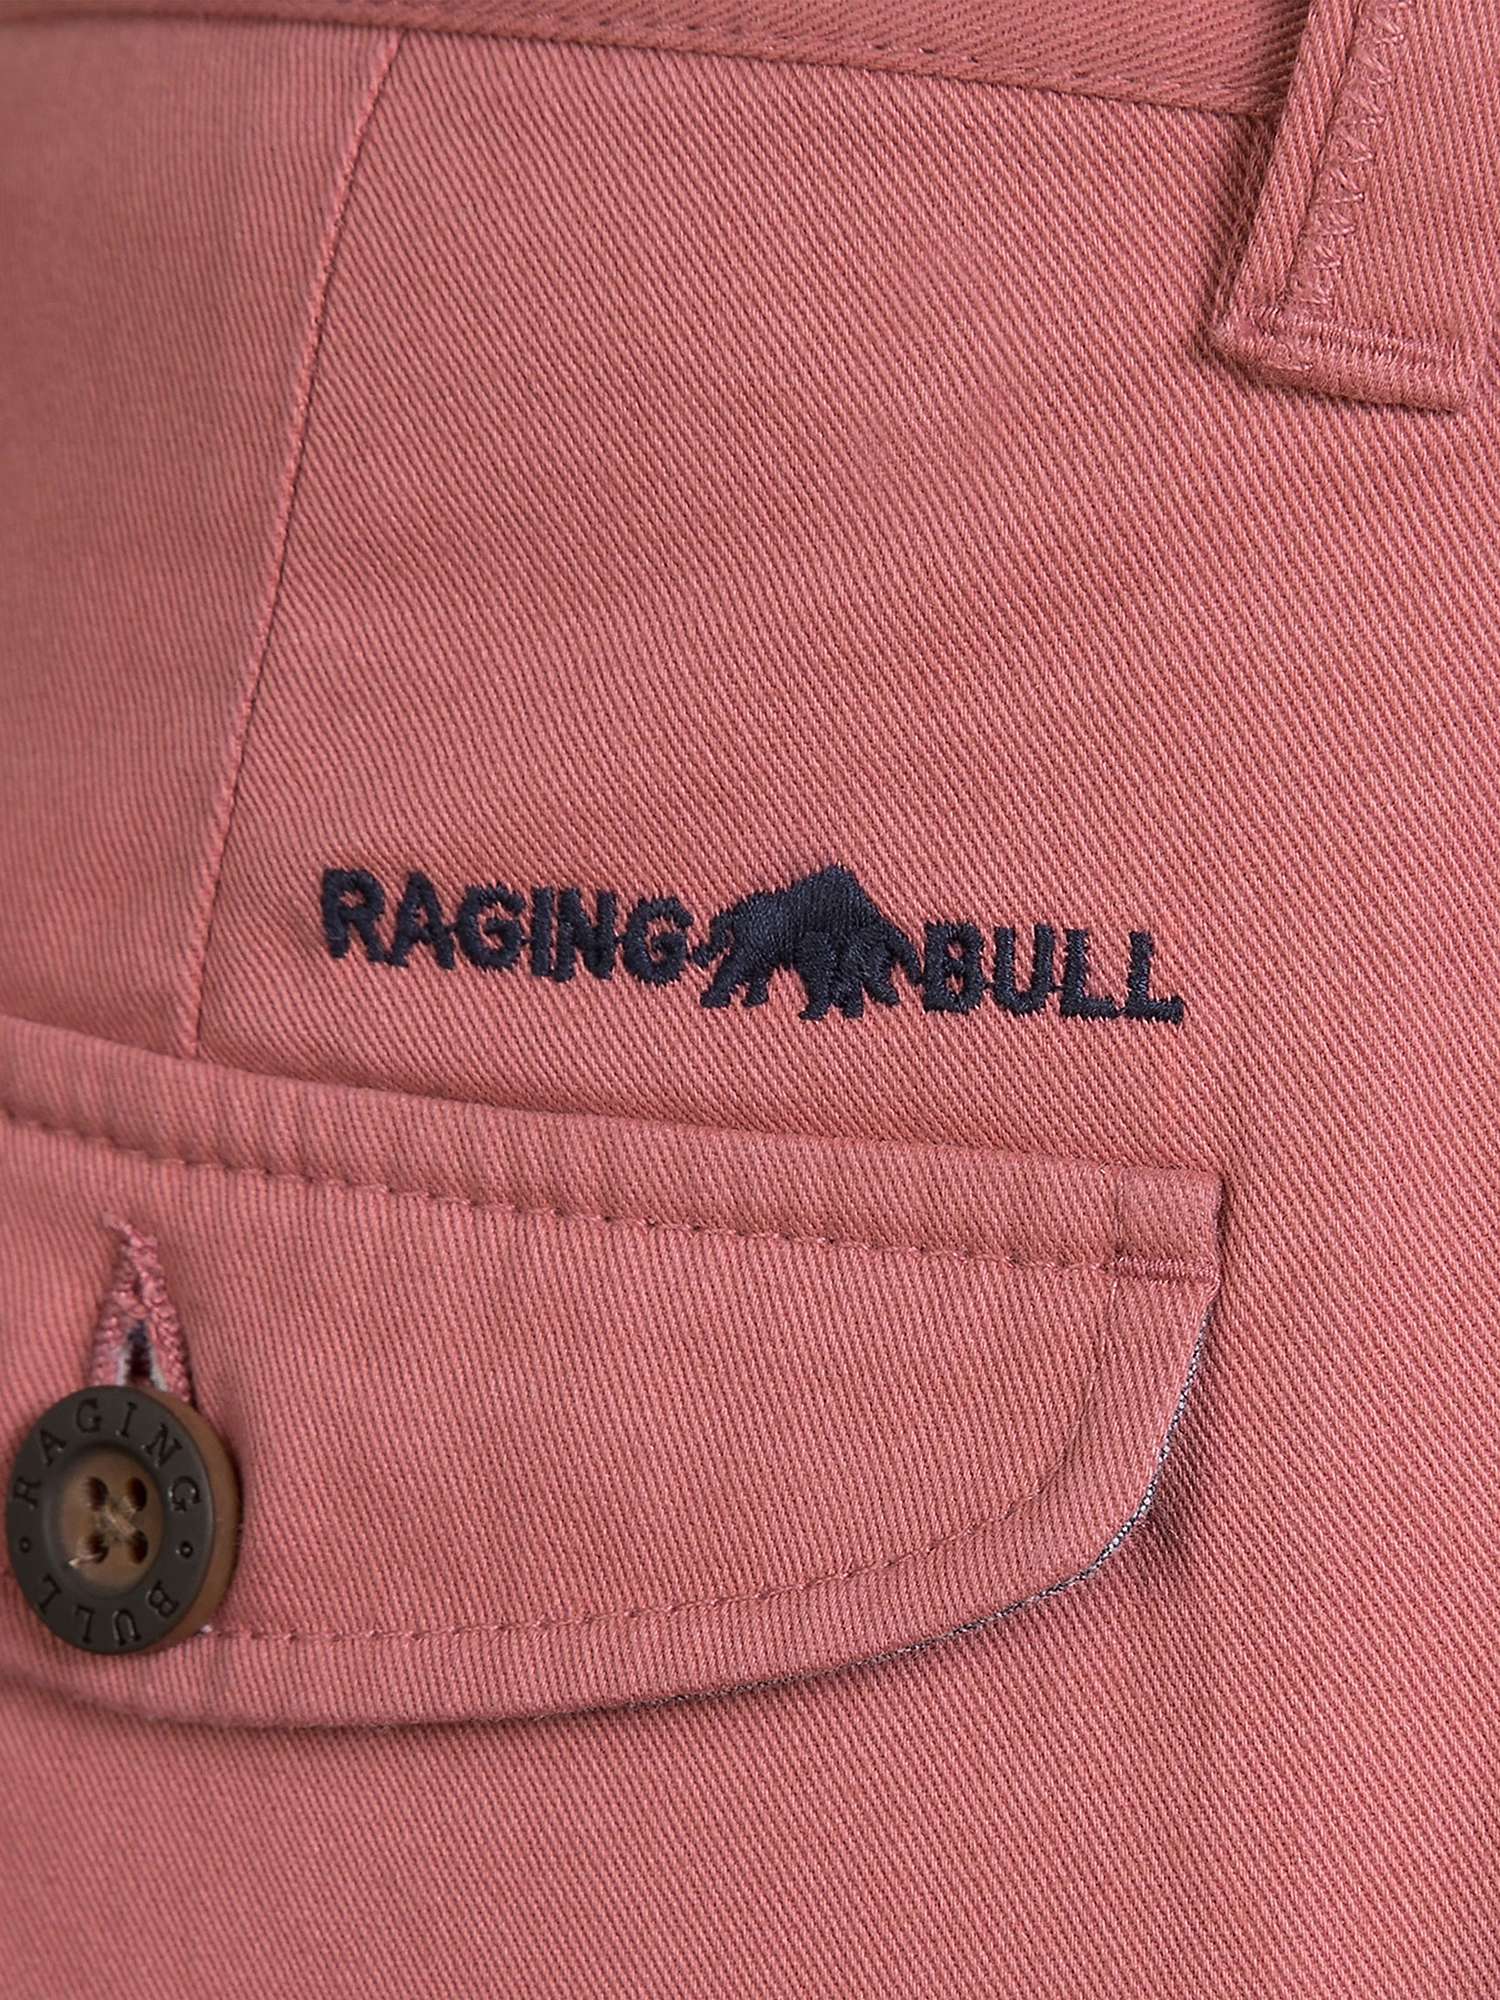 Buy Raging Bull Chino Shorts Online at johnlewis.com